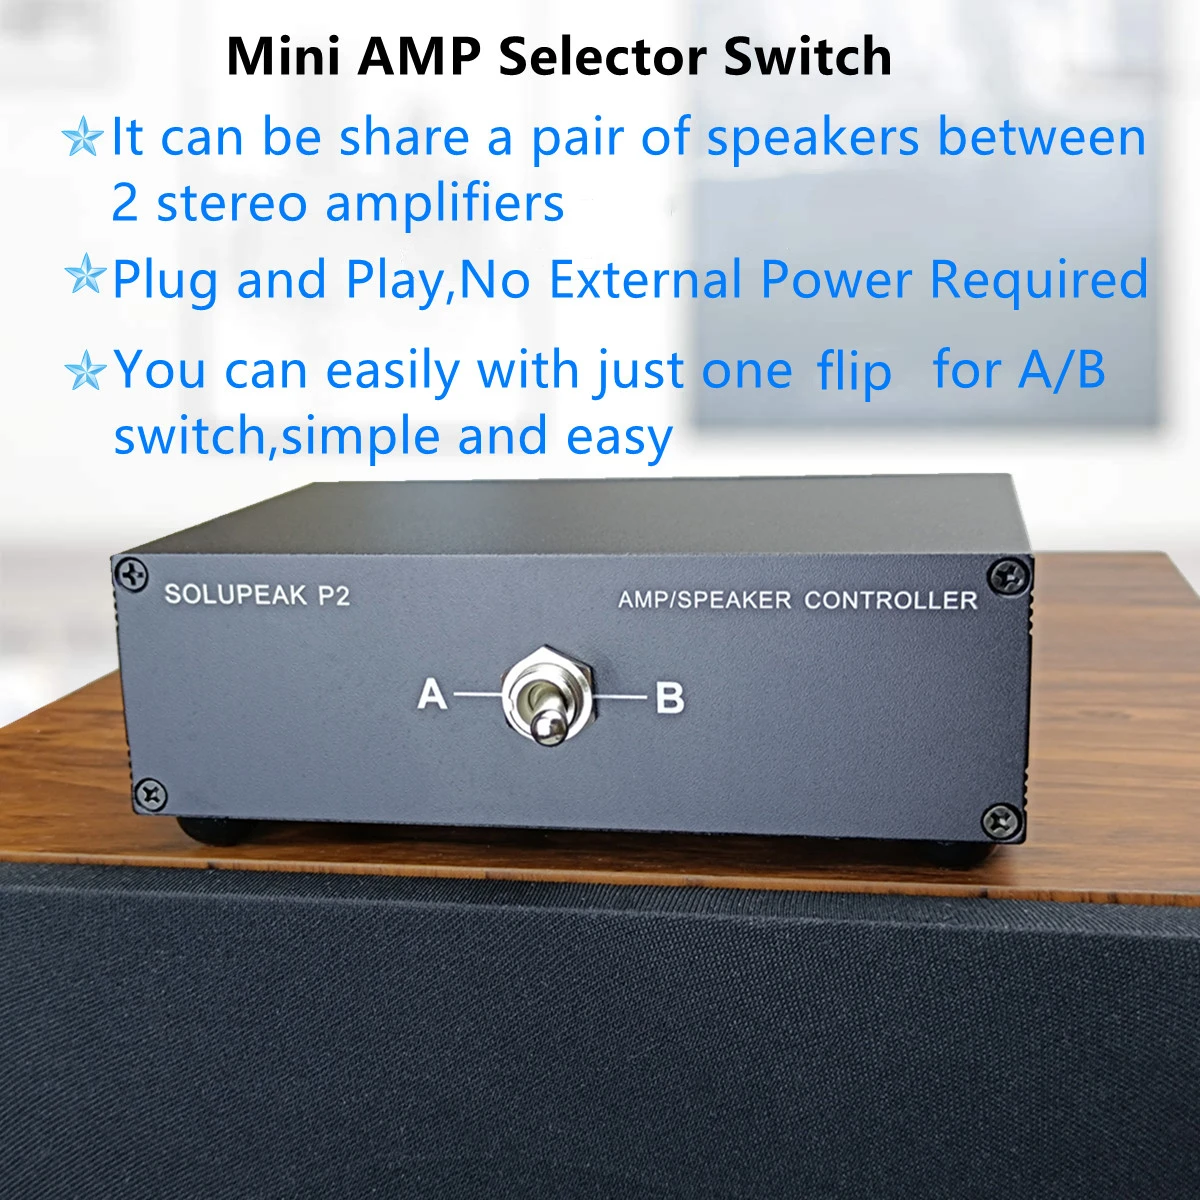 SOLUPEAK P2 2(1)-in-1(2)-Out Amp Amplifier Speaker Switcher Selector Switch Splitter 2-Way loudspeaker Control Combiner Box